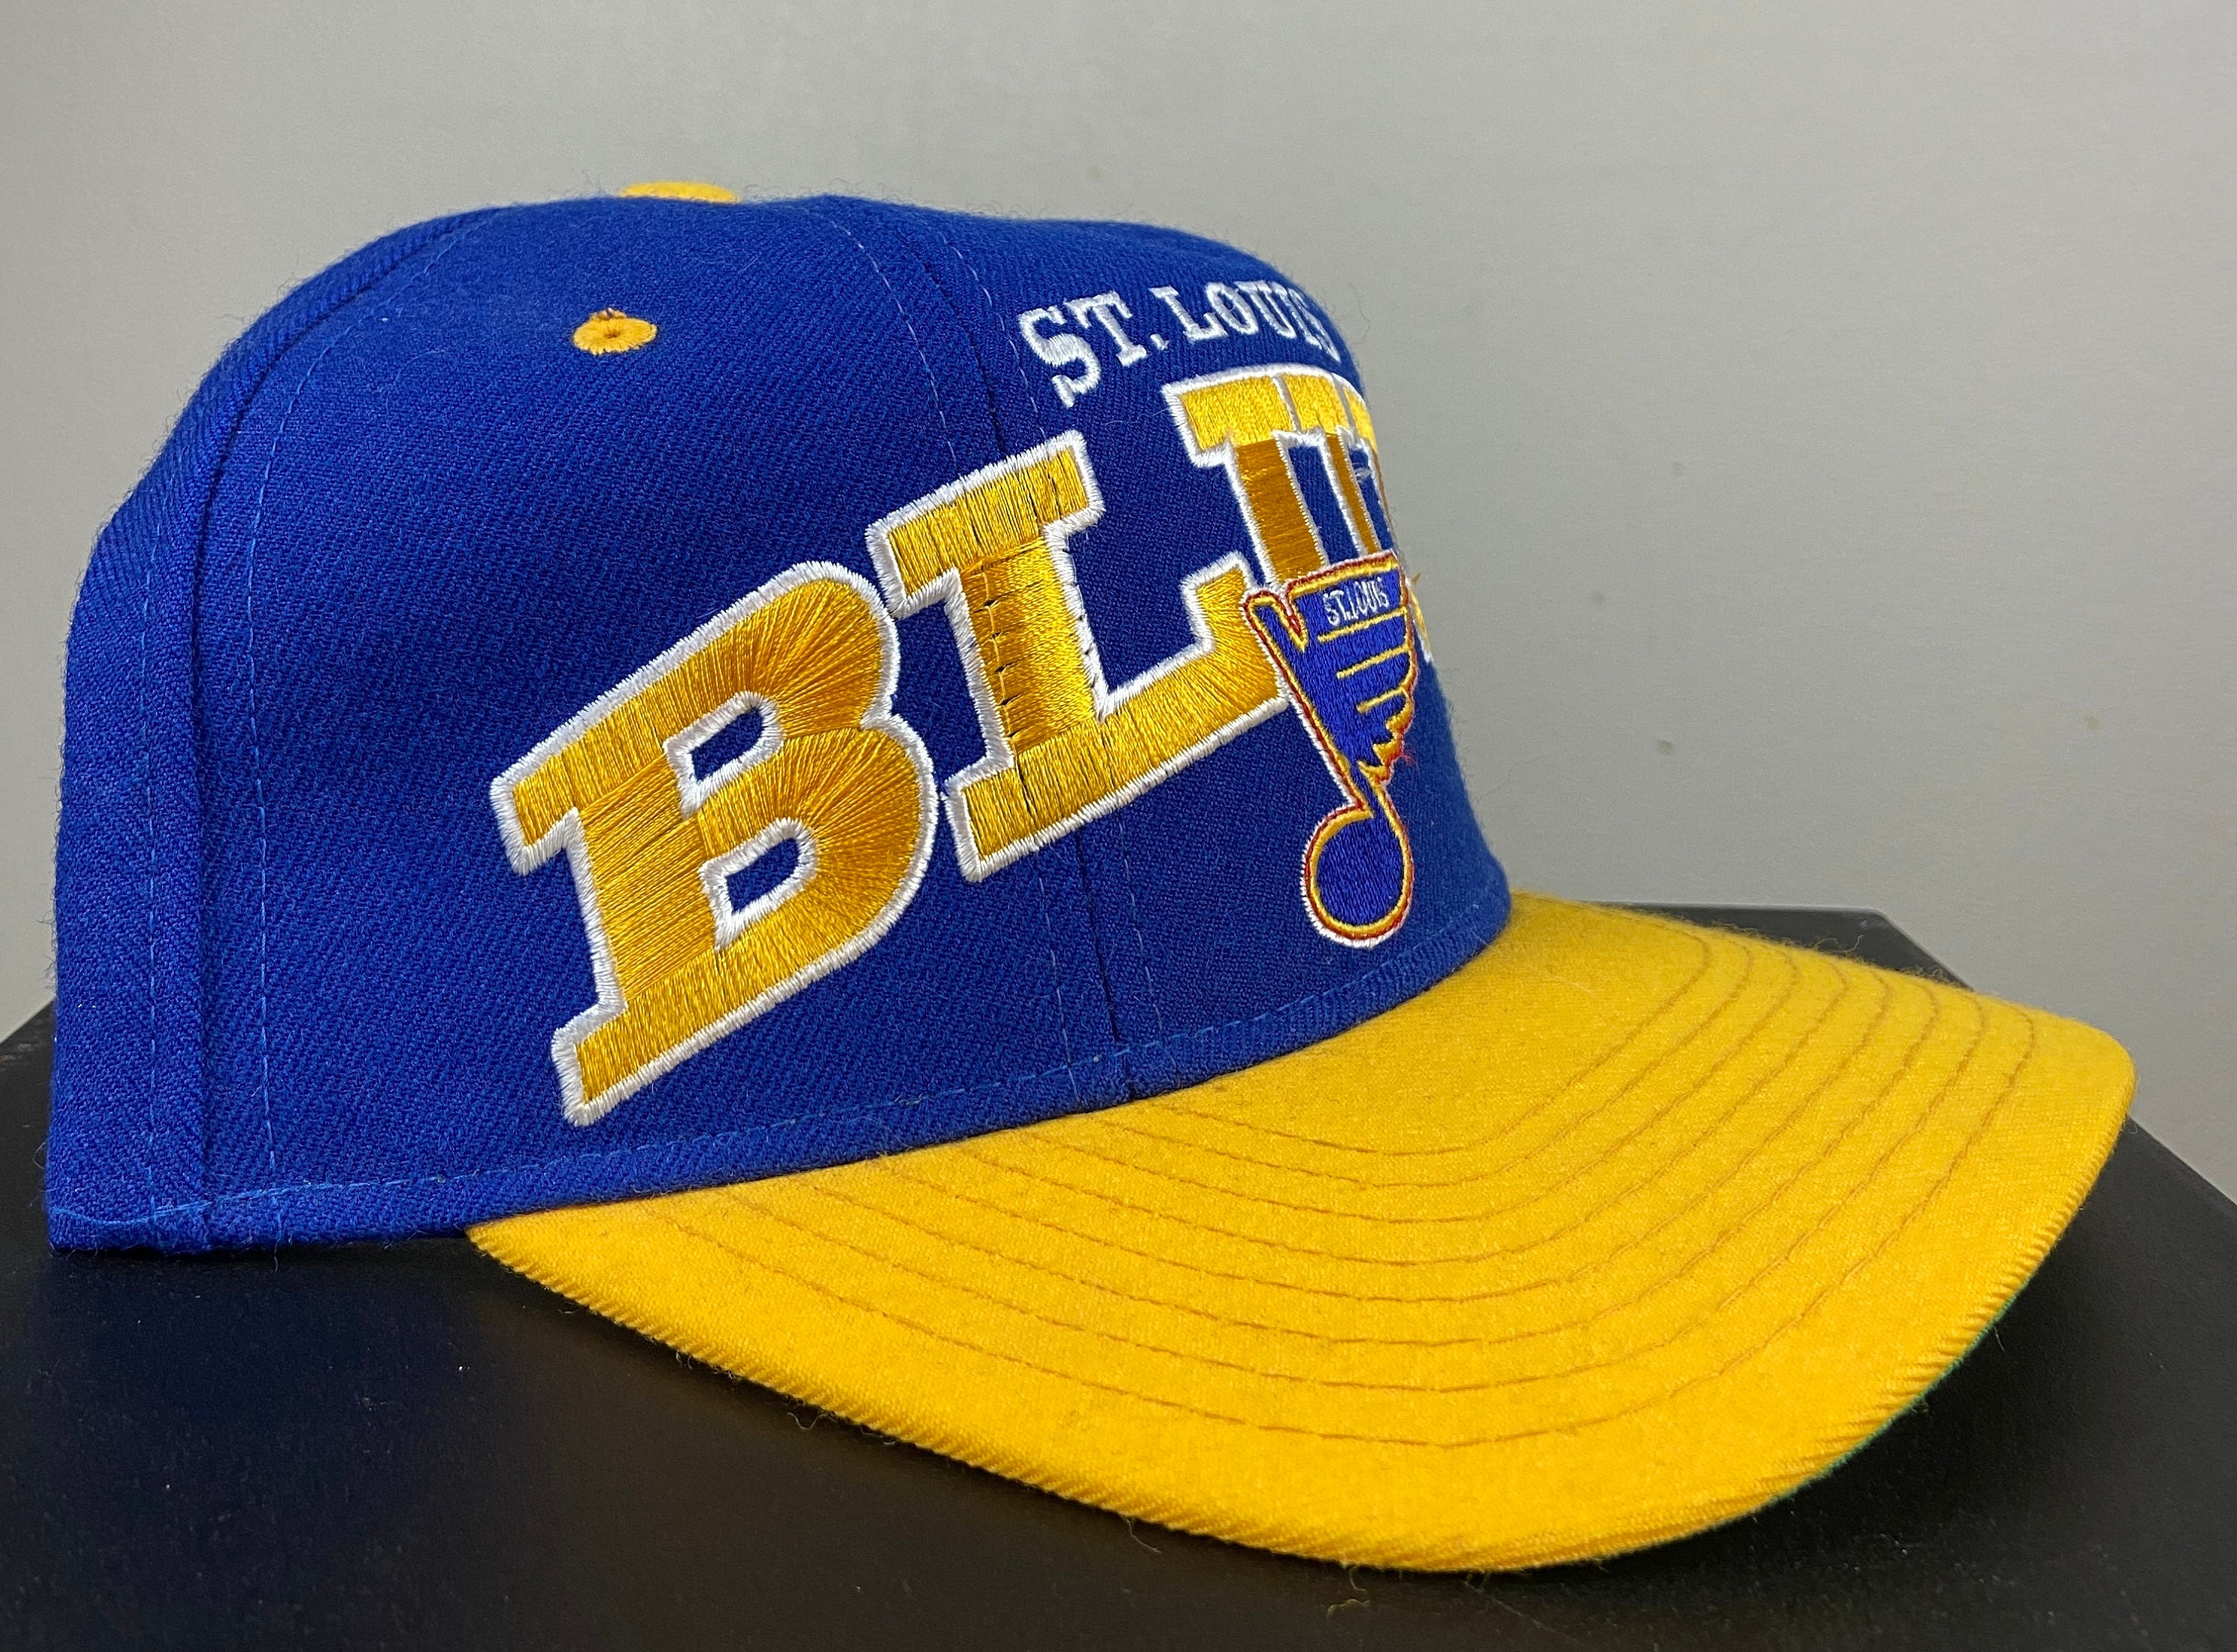 Buy Vintage St Louis Blues Snapback Hat Starter NHL Hockey Online